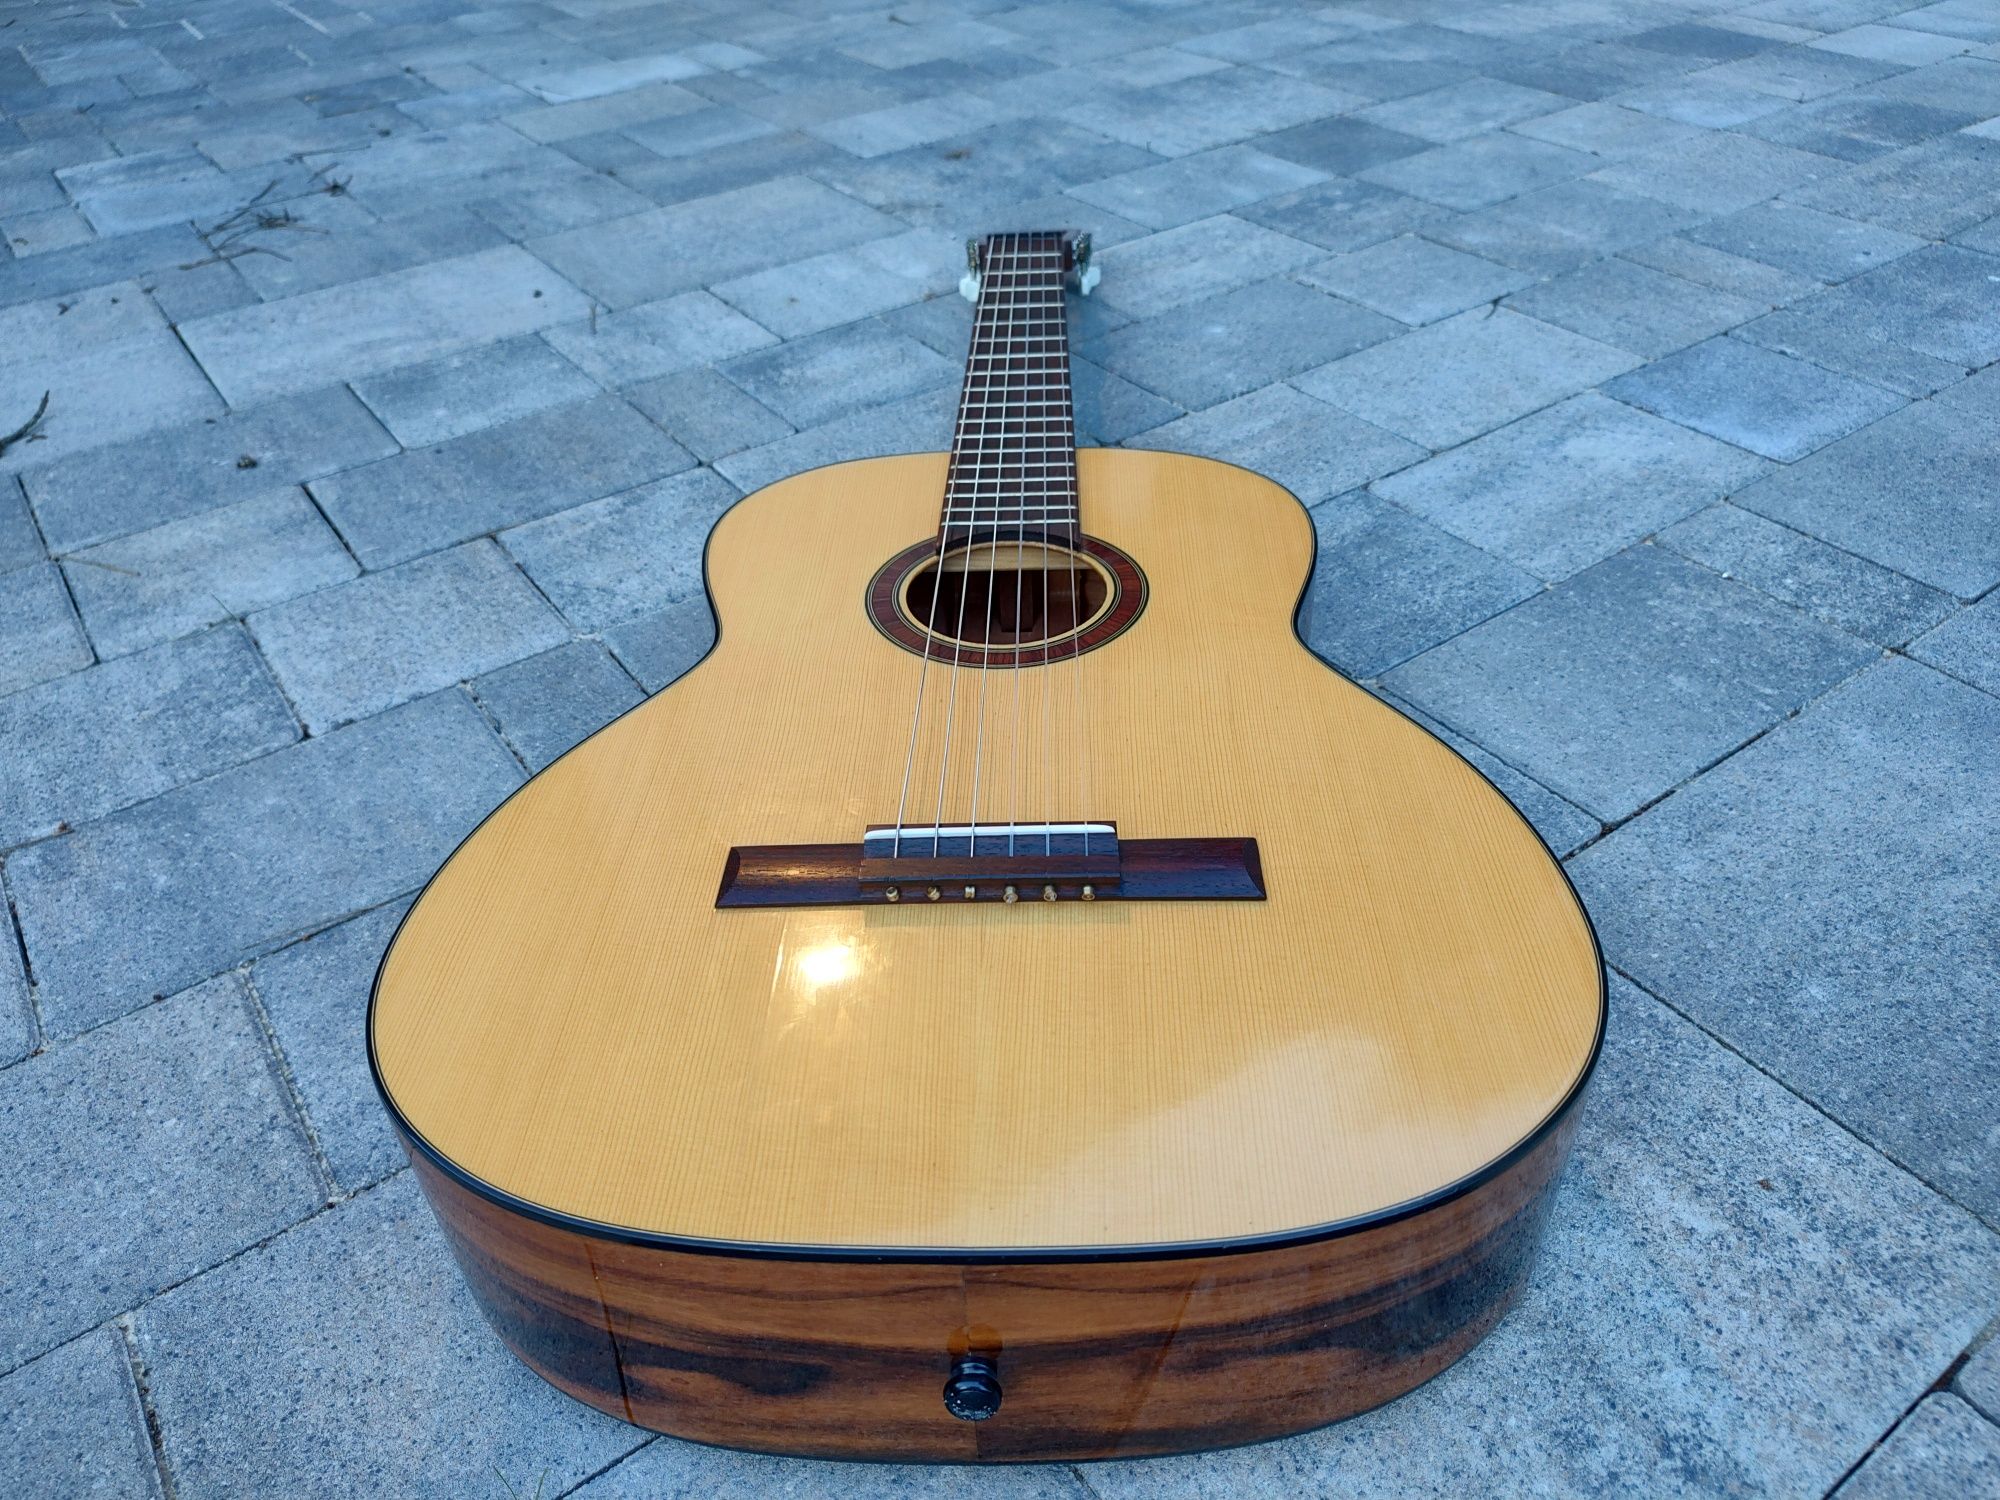 Höfner Luxor 41/210 gitara klasyczna PRZEPIĘKNA genialna UNIQUE !!